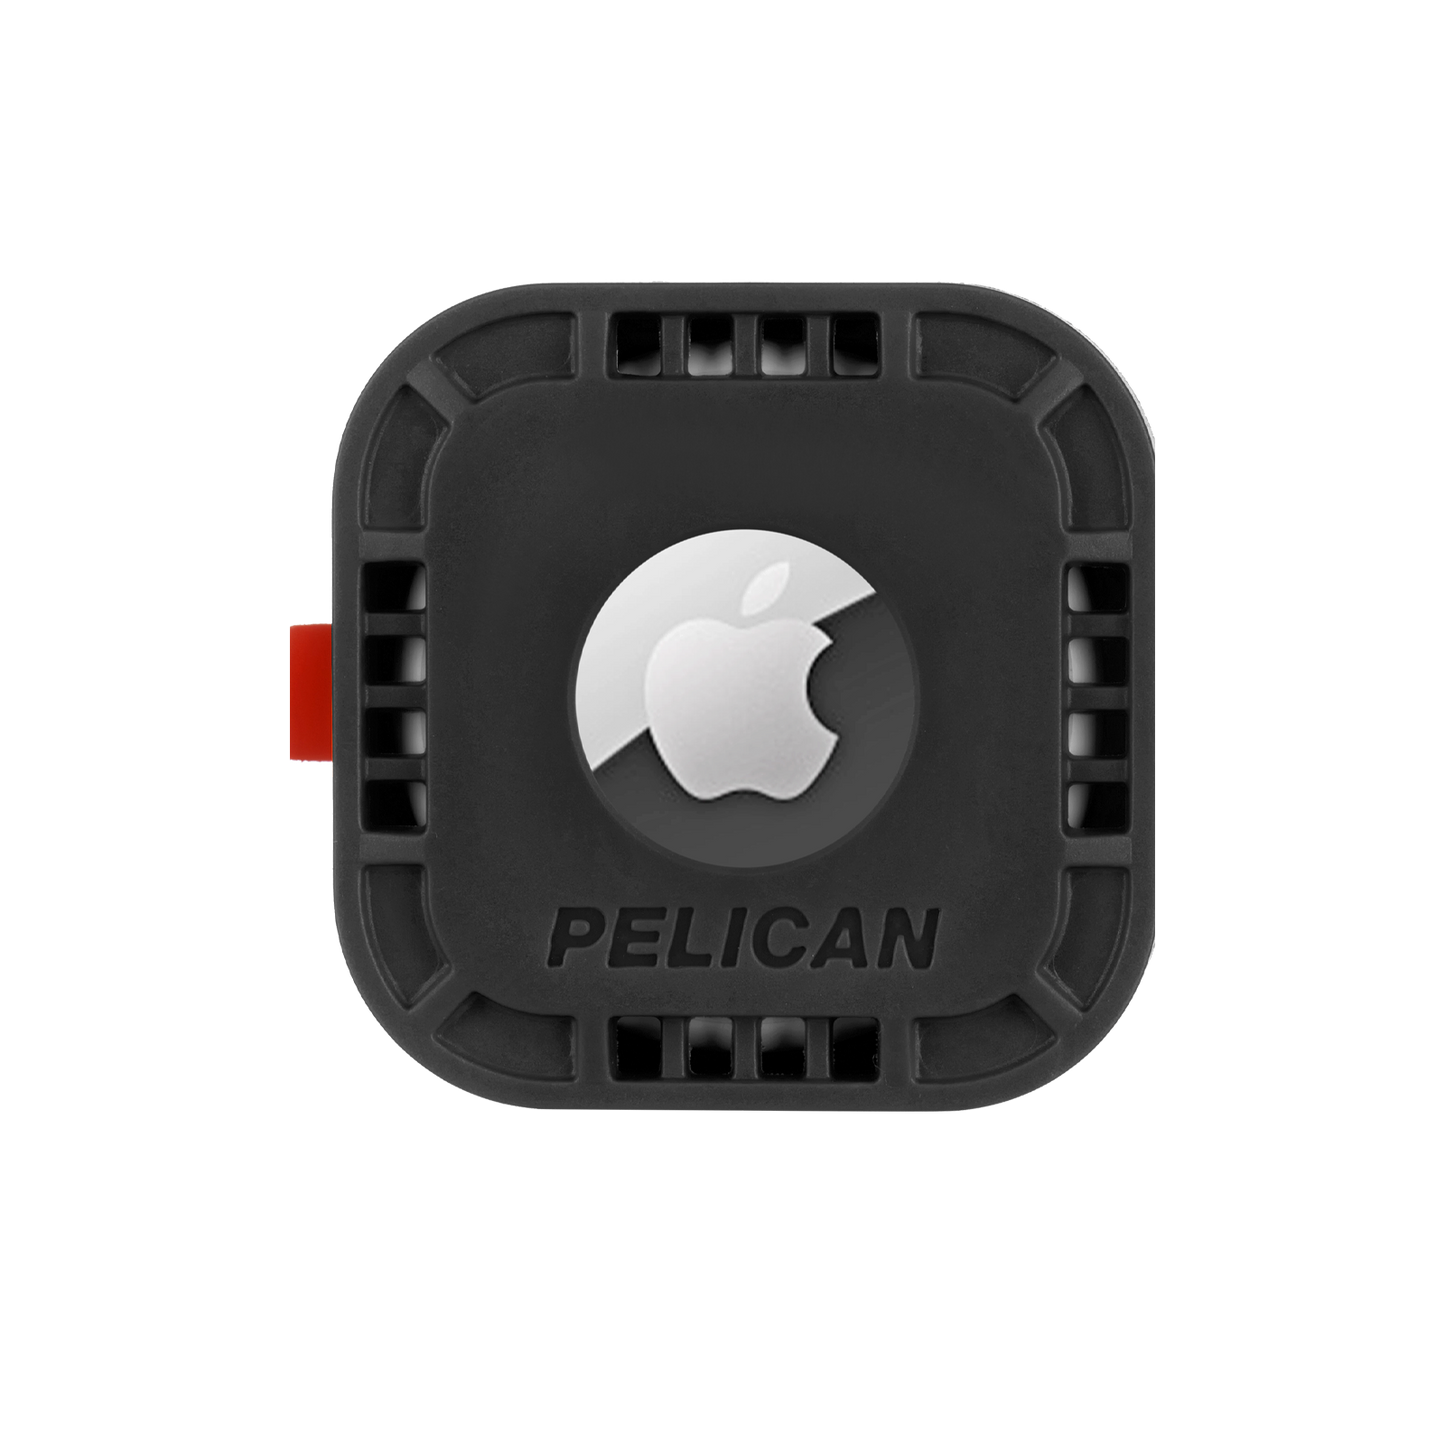 Genuine Pelican Heavy Duty Air Tagg Protector Case Sticker Mount - AU Stock